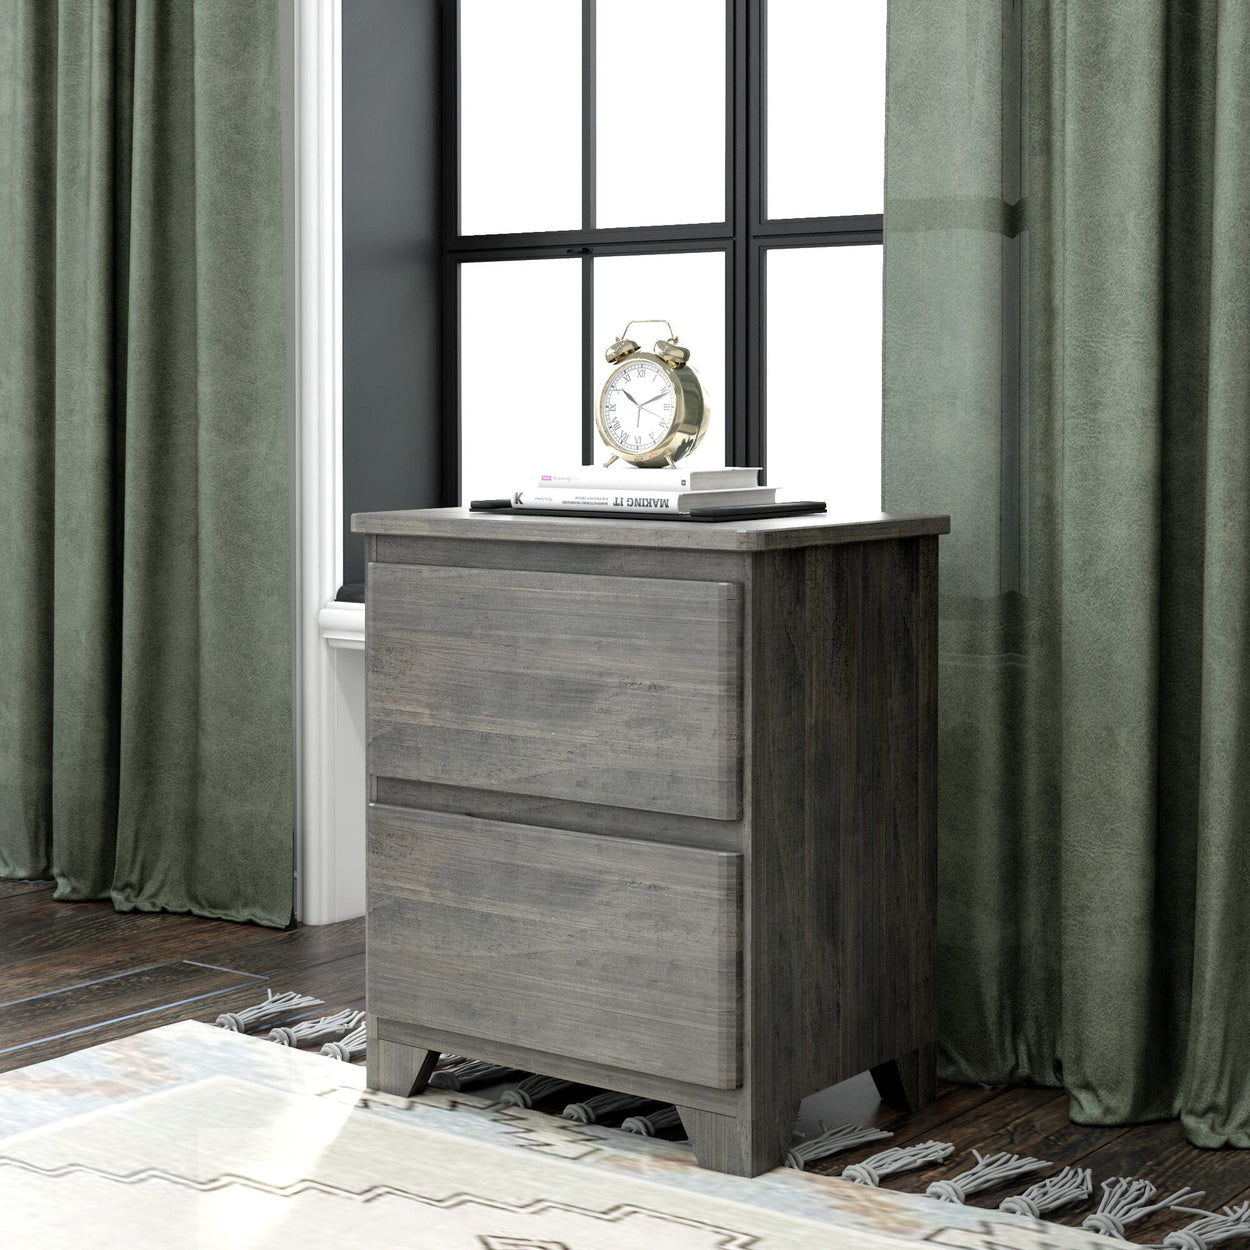 190002-185 : Furniture K/D 2 Drawer Nightstand w/ metal drawer glides (22"L x 15.75"W x 26.25"H), Driftwood